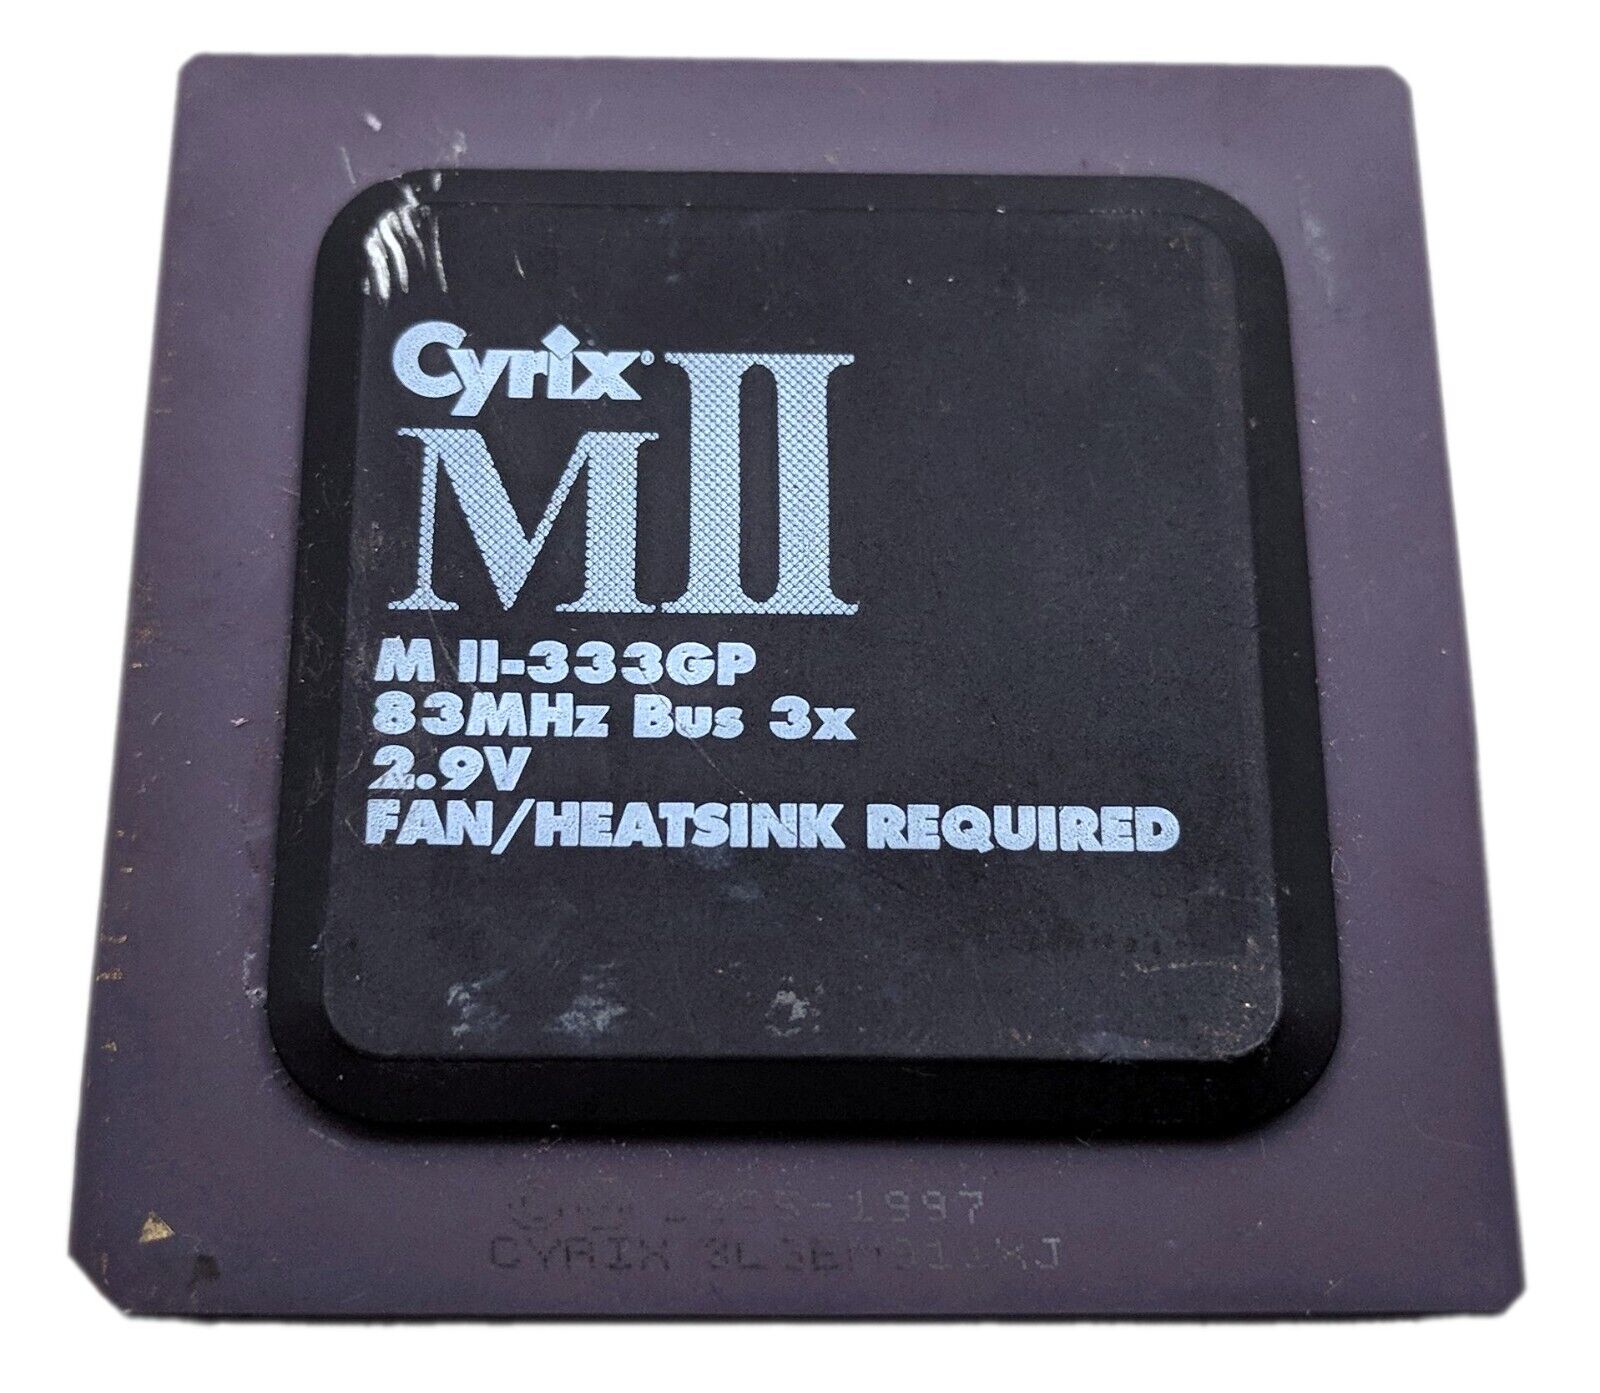 Vintage 1995 Cyrix MII M II-333GP 83MHz Bus 3x 2.9V CPU Processor Ceramic Gold